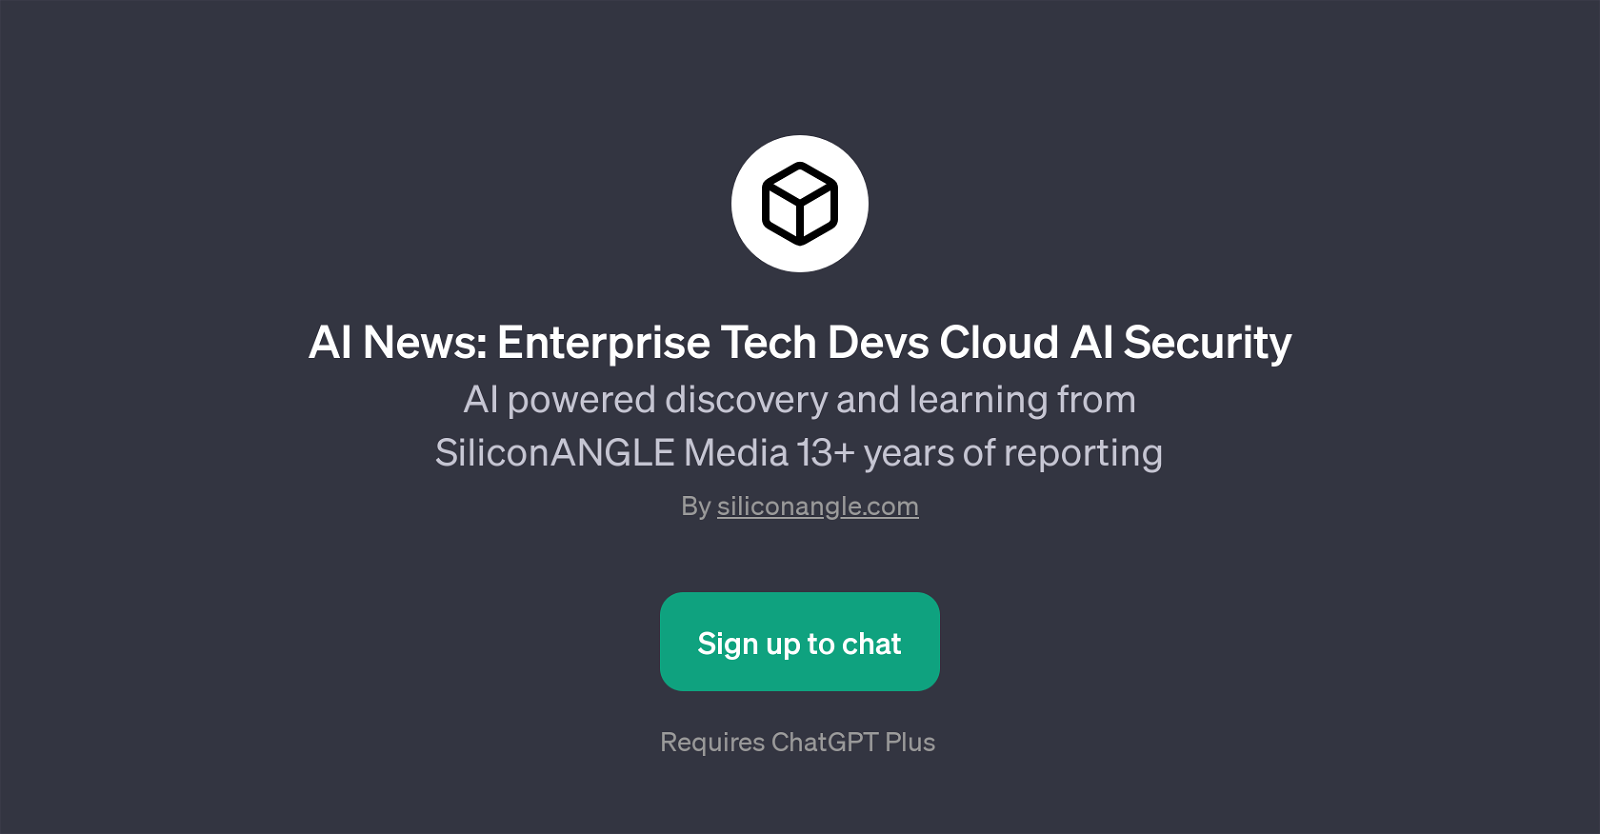 AI News: Enterprise Tech Devs Cloud AI Security website